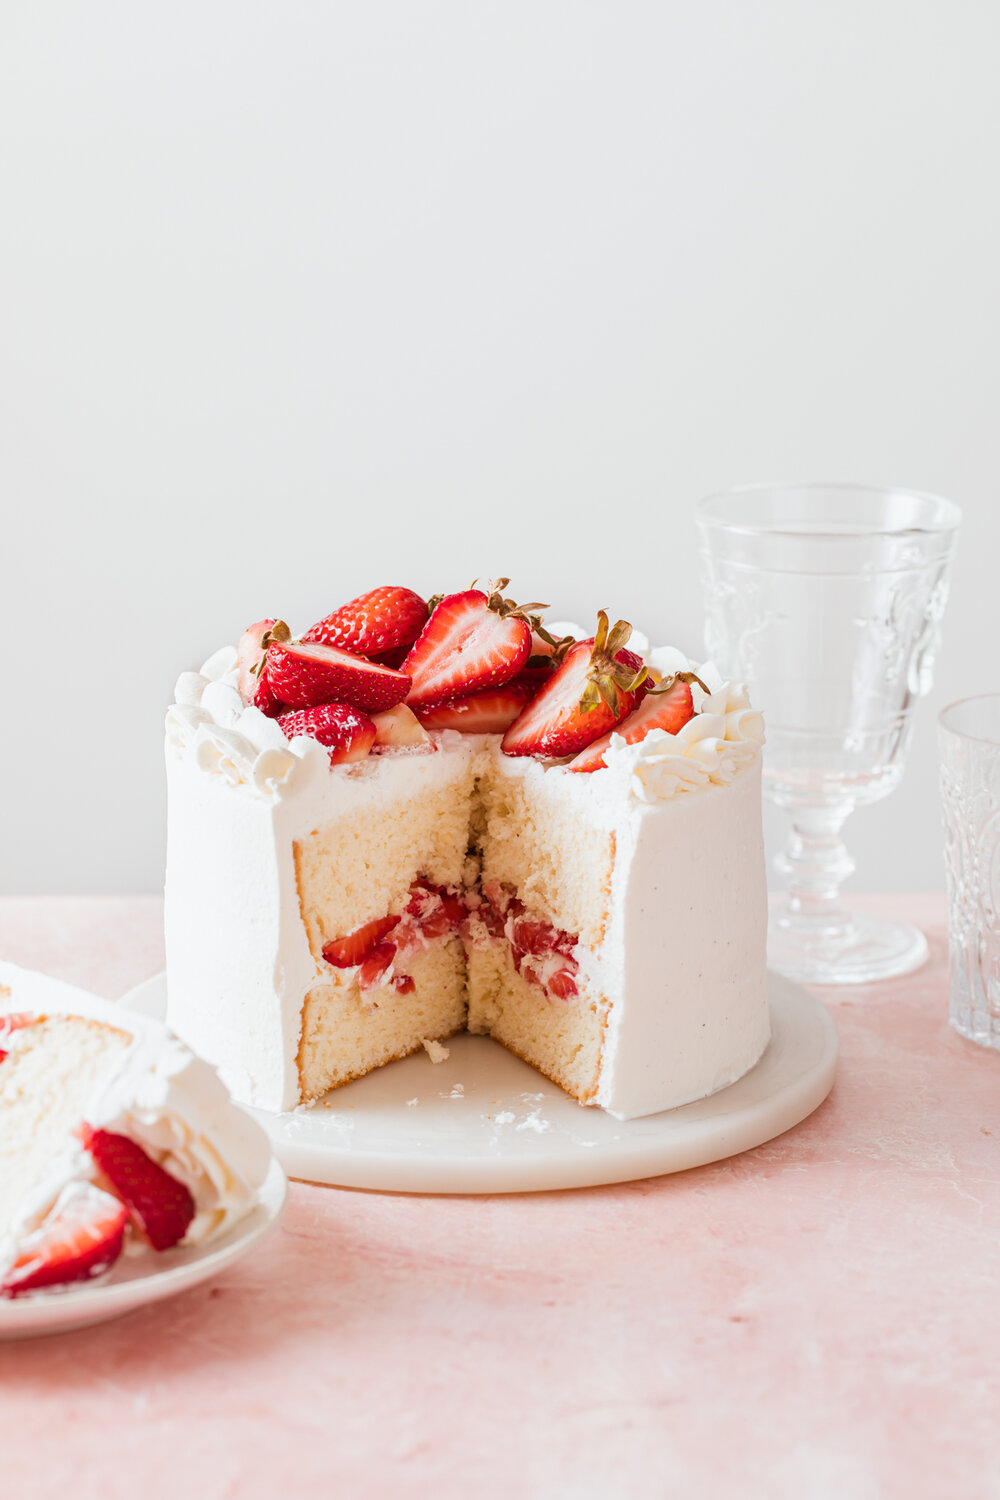 Mini Strawberry Chiffon Cake with whipped cream